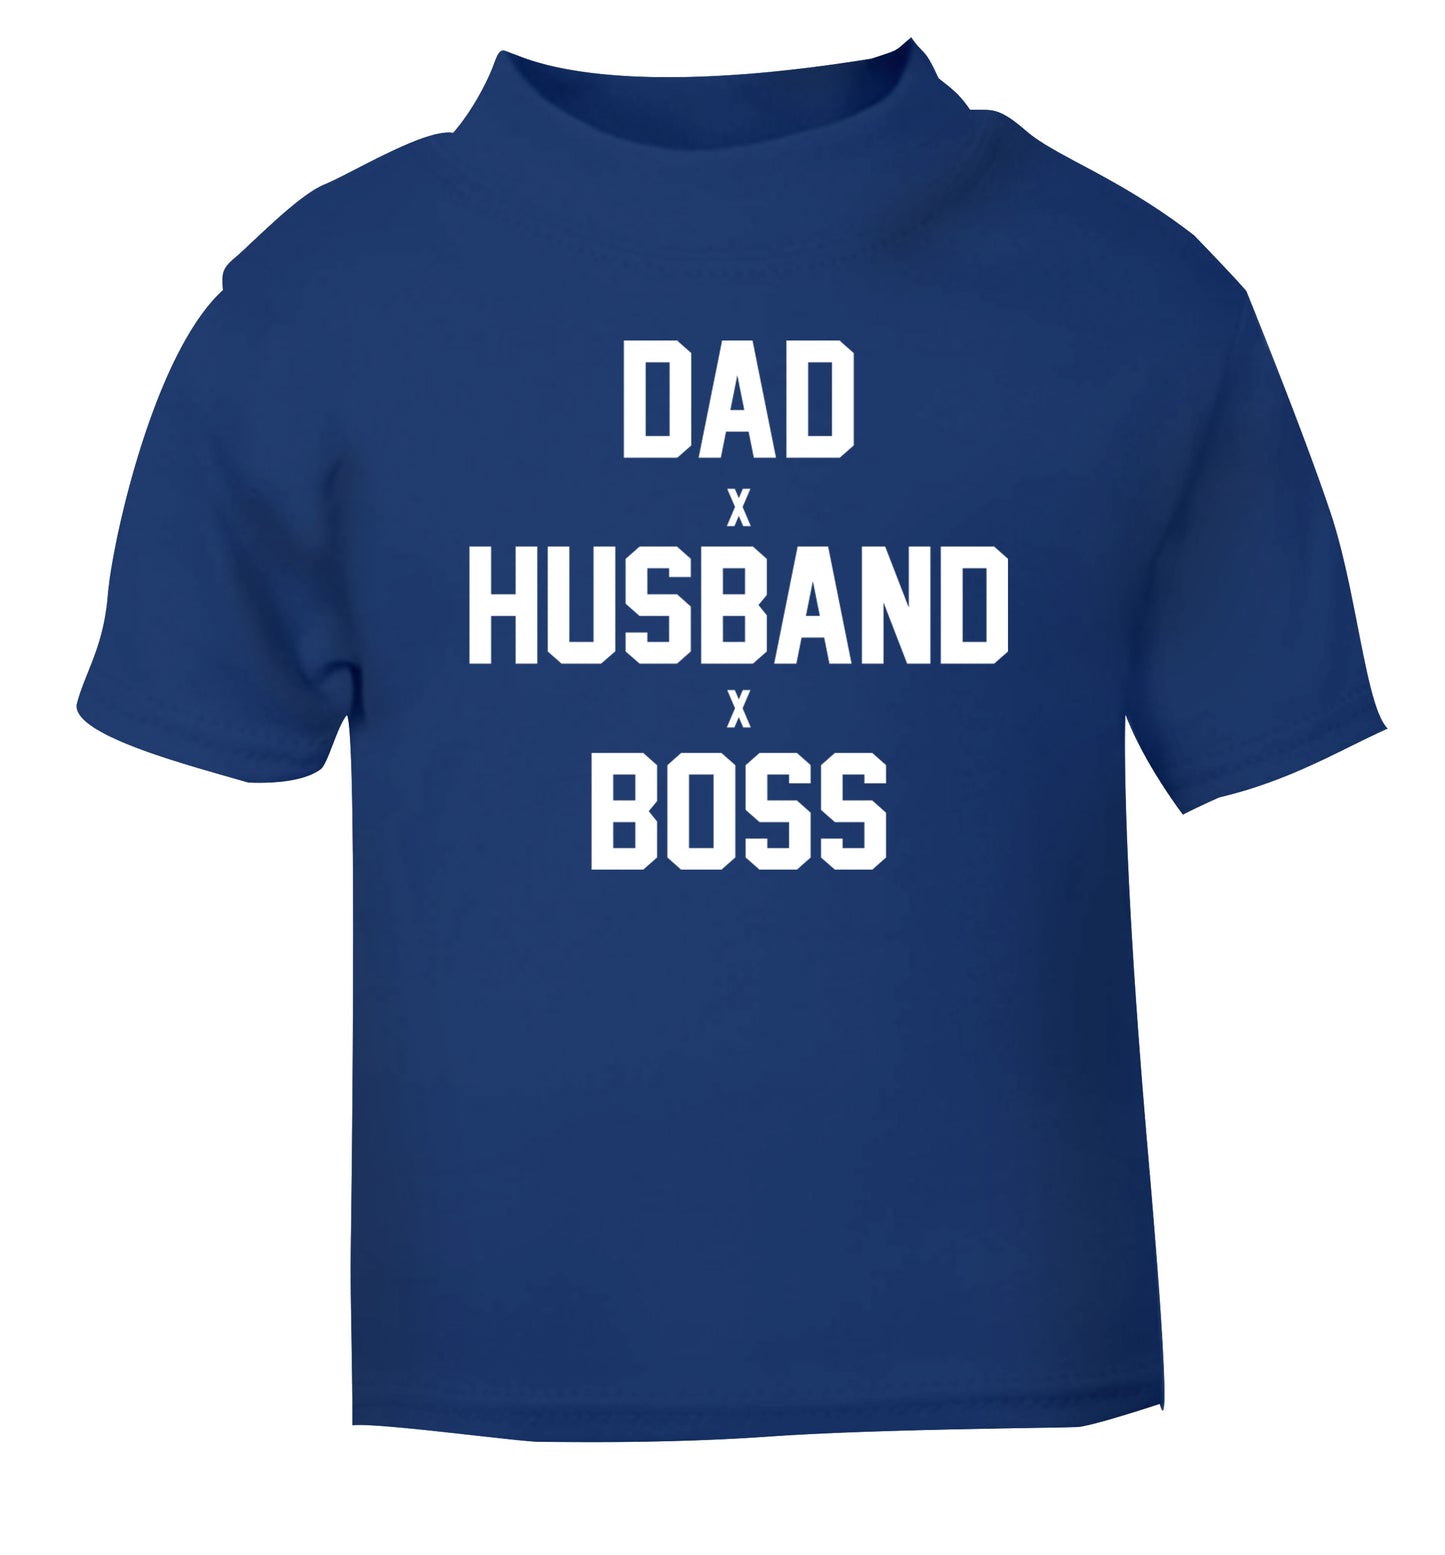 Dad husband boss blue Baby Toddler Tshirt 2 Years